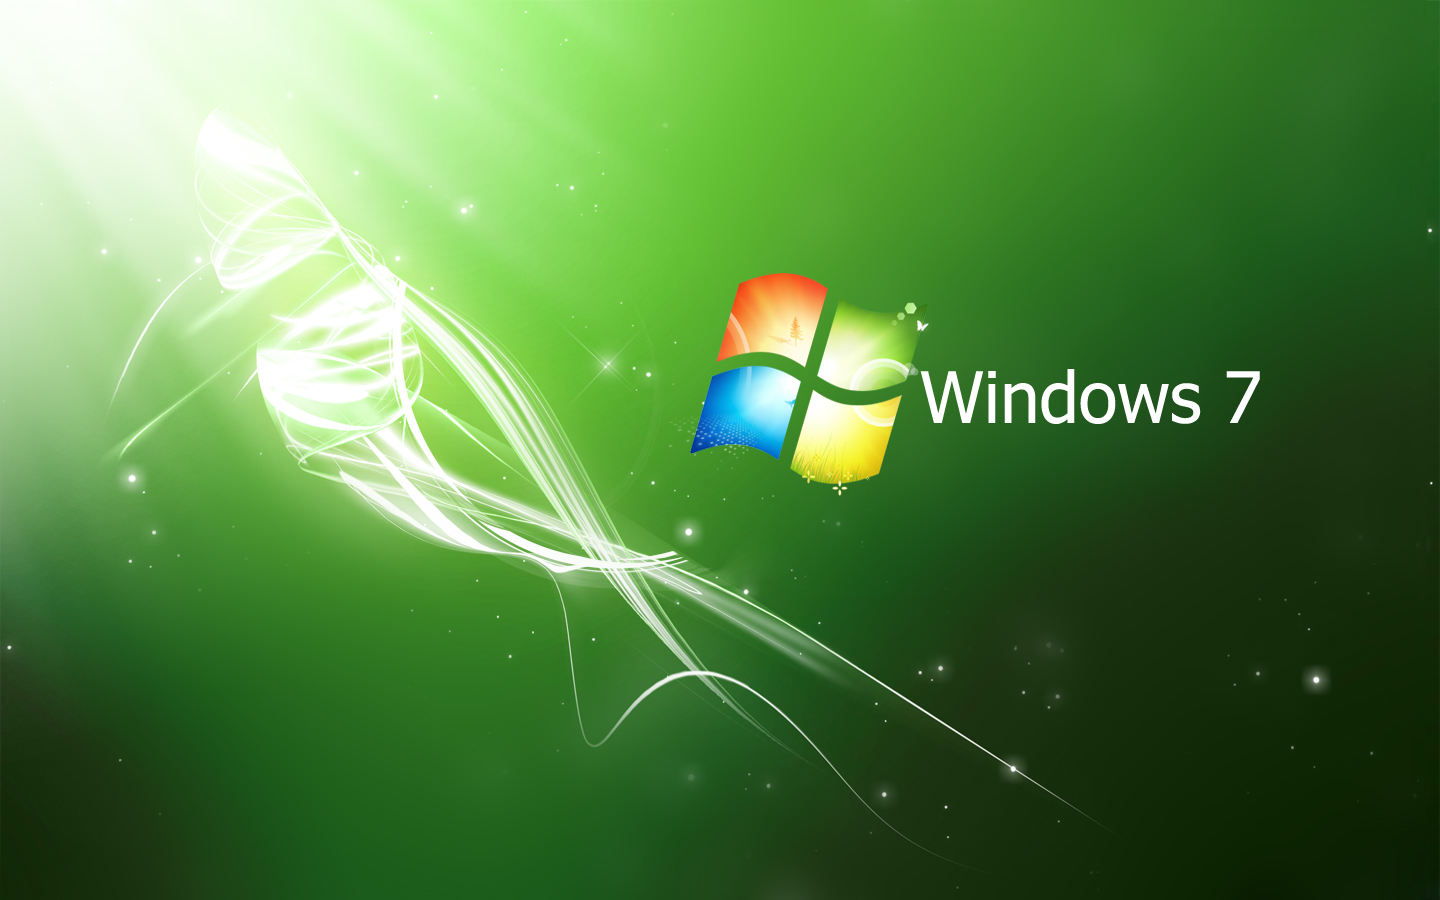 Cool Windows 7 Backgrounds - WallpaperSafari